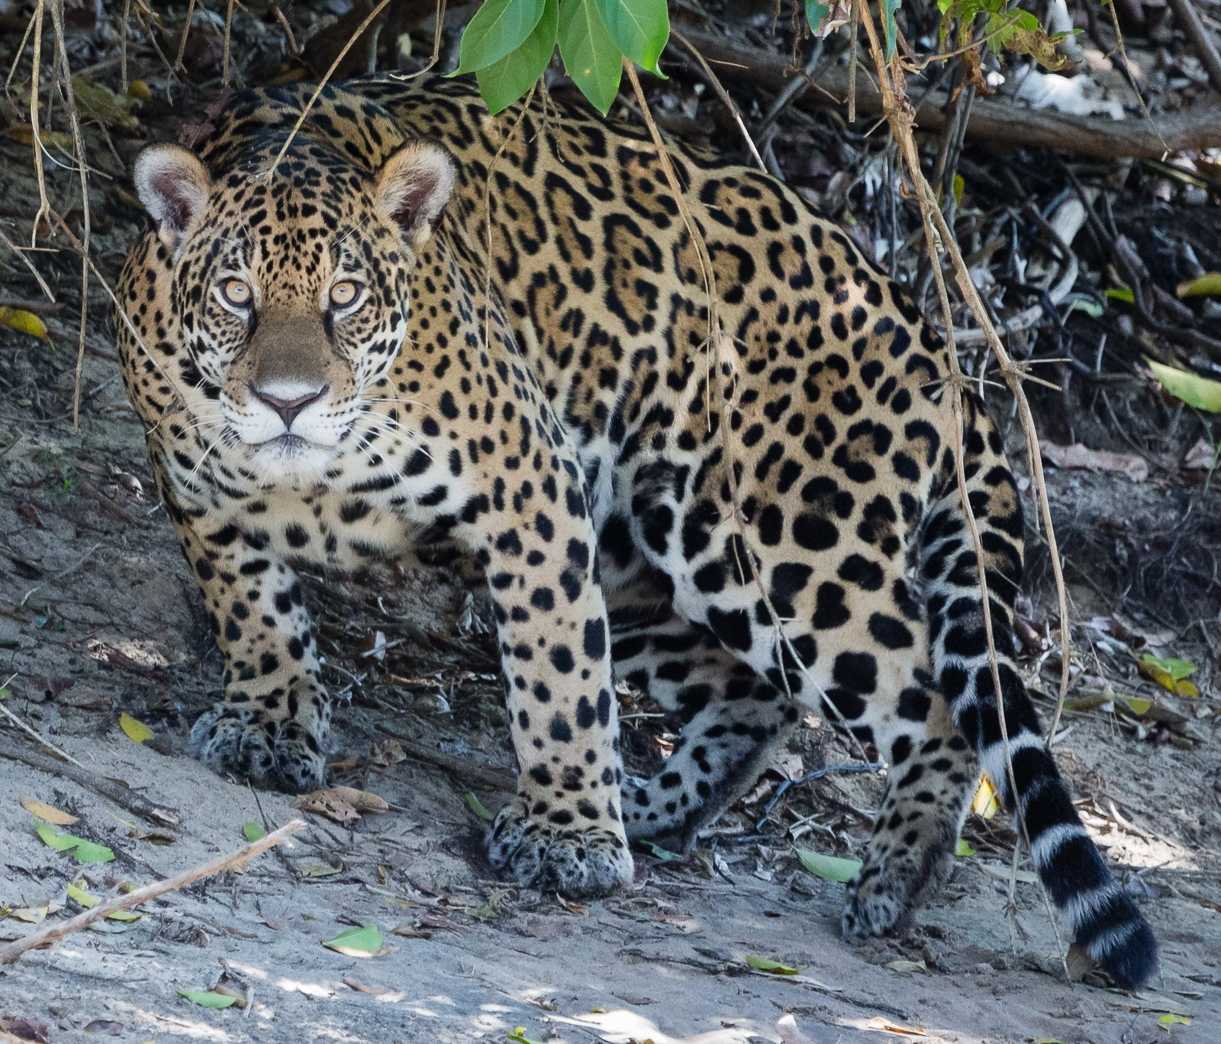 South American jaguar in the area of Miranda near Amazon basin